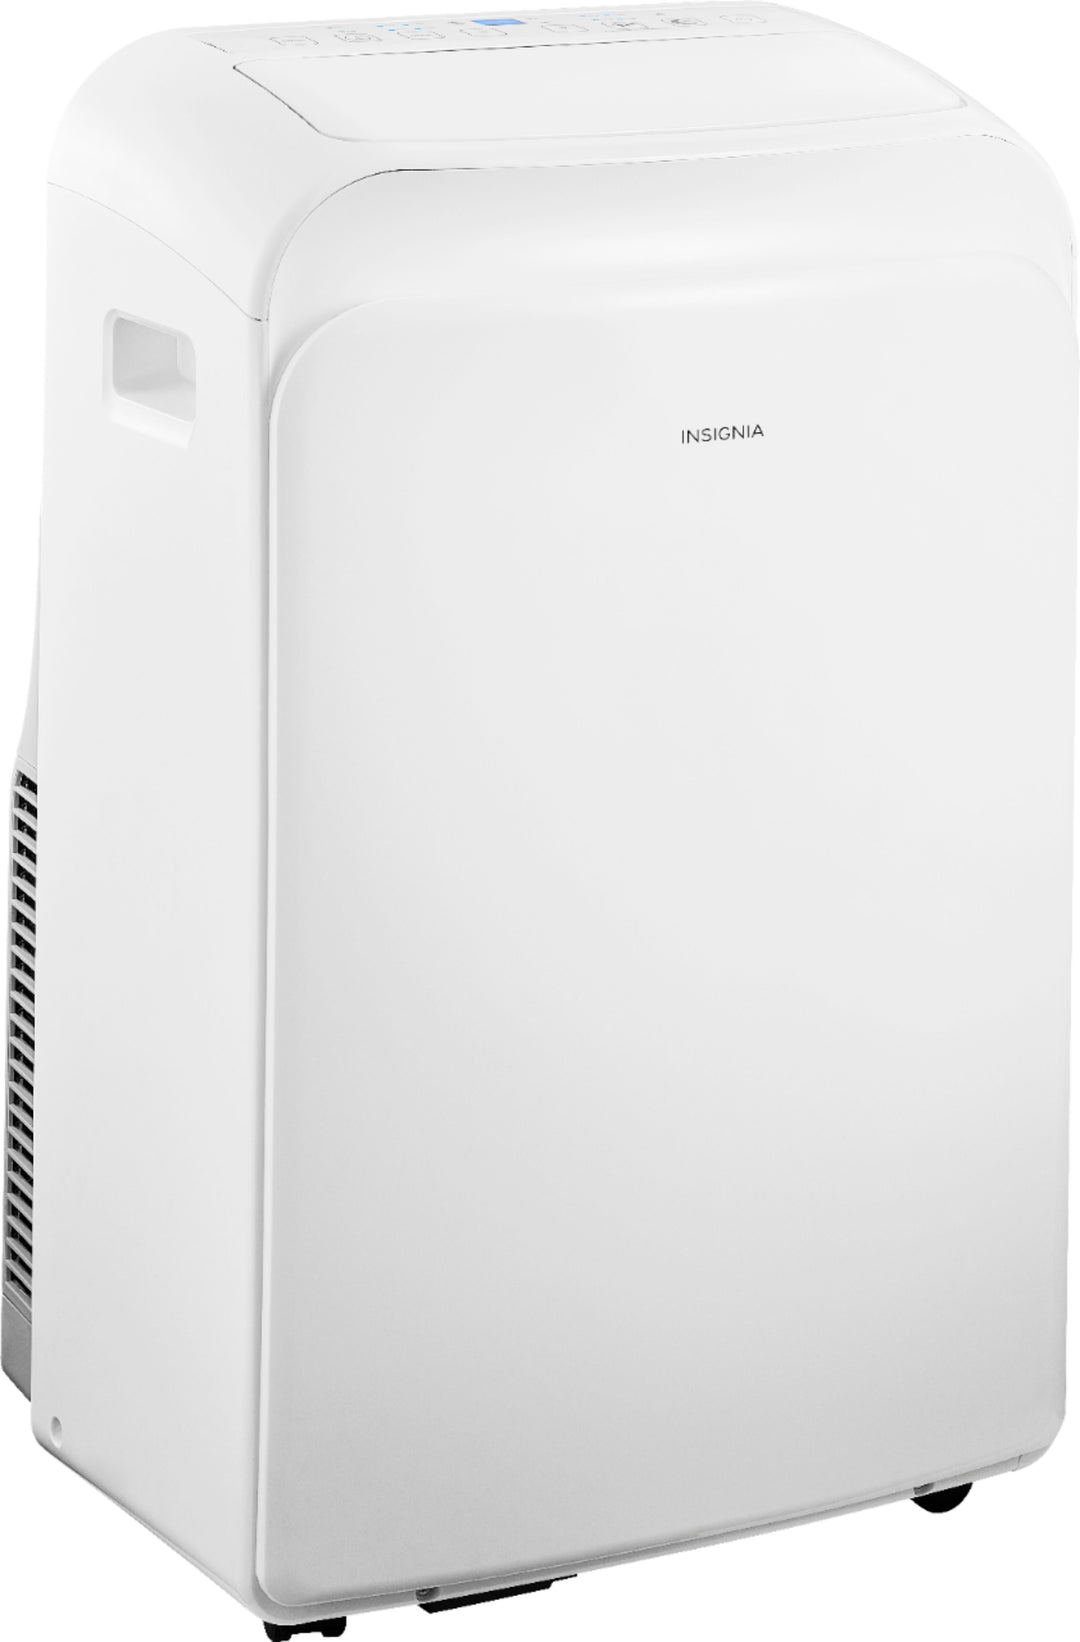 Insignia™ - 350 Sq. Ft. Portable Air Conditioner - White_2